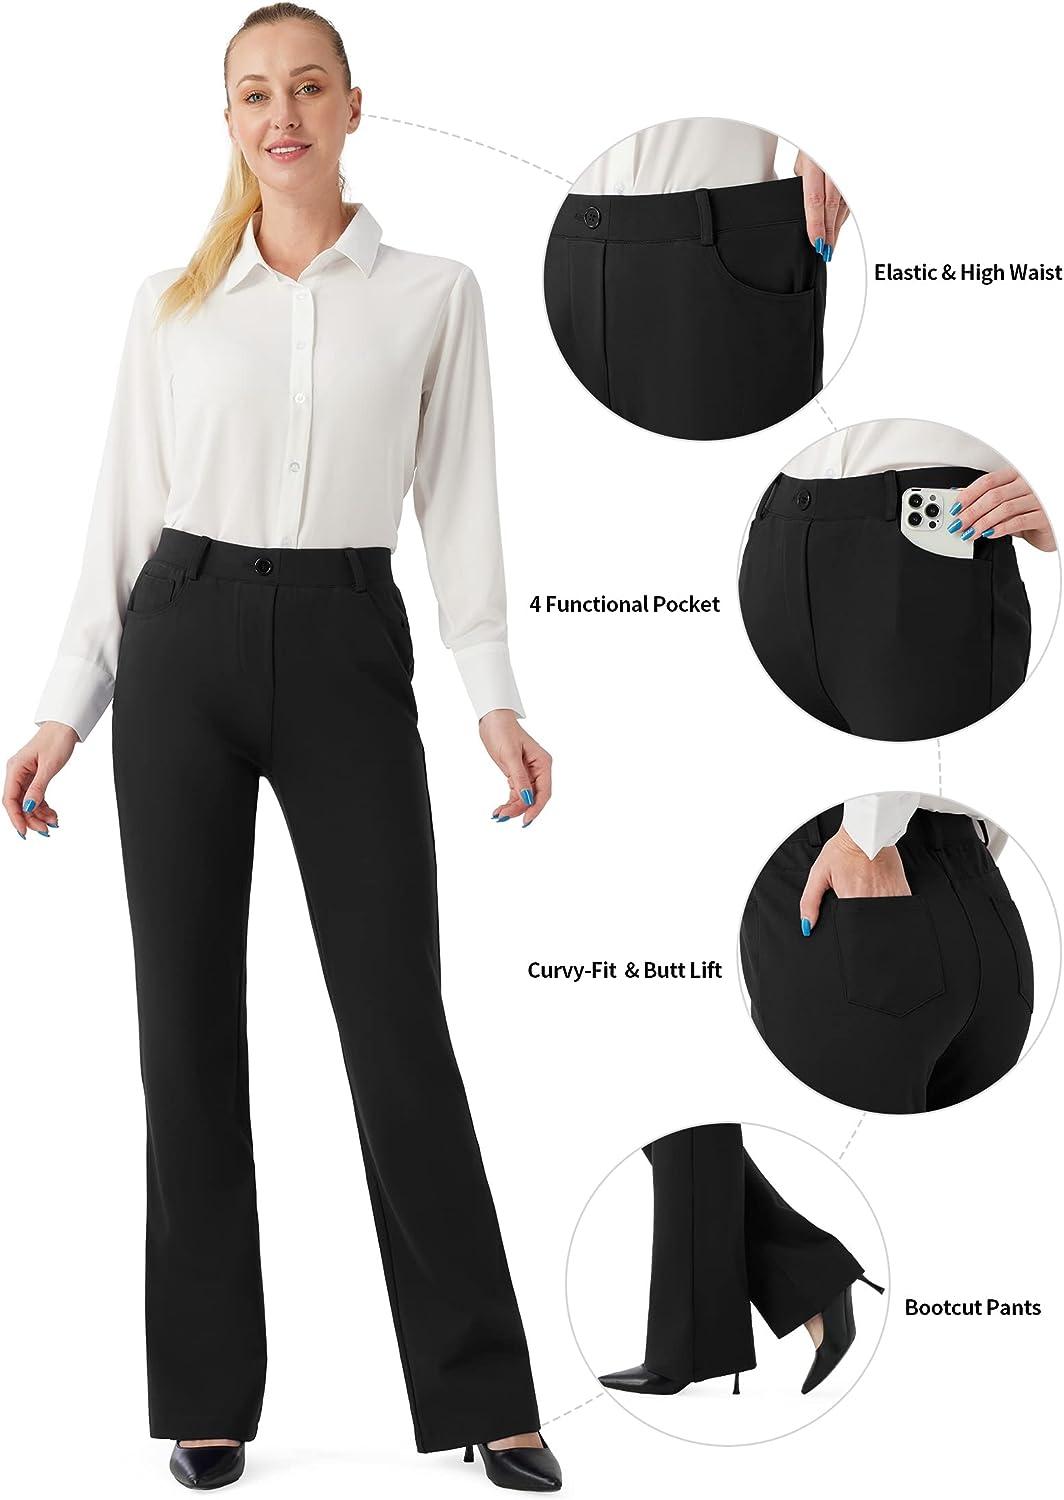 Black, Dress Pants For Women, Formal Pants